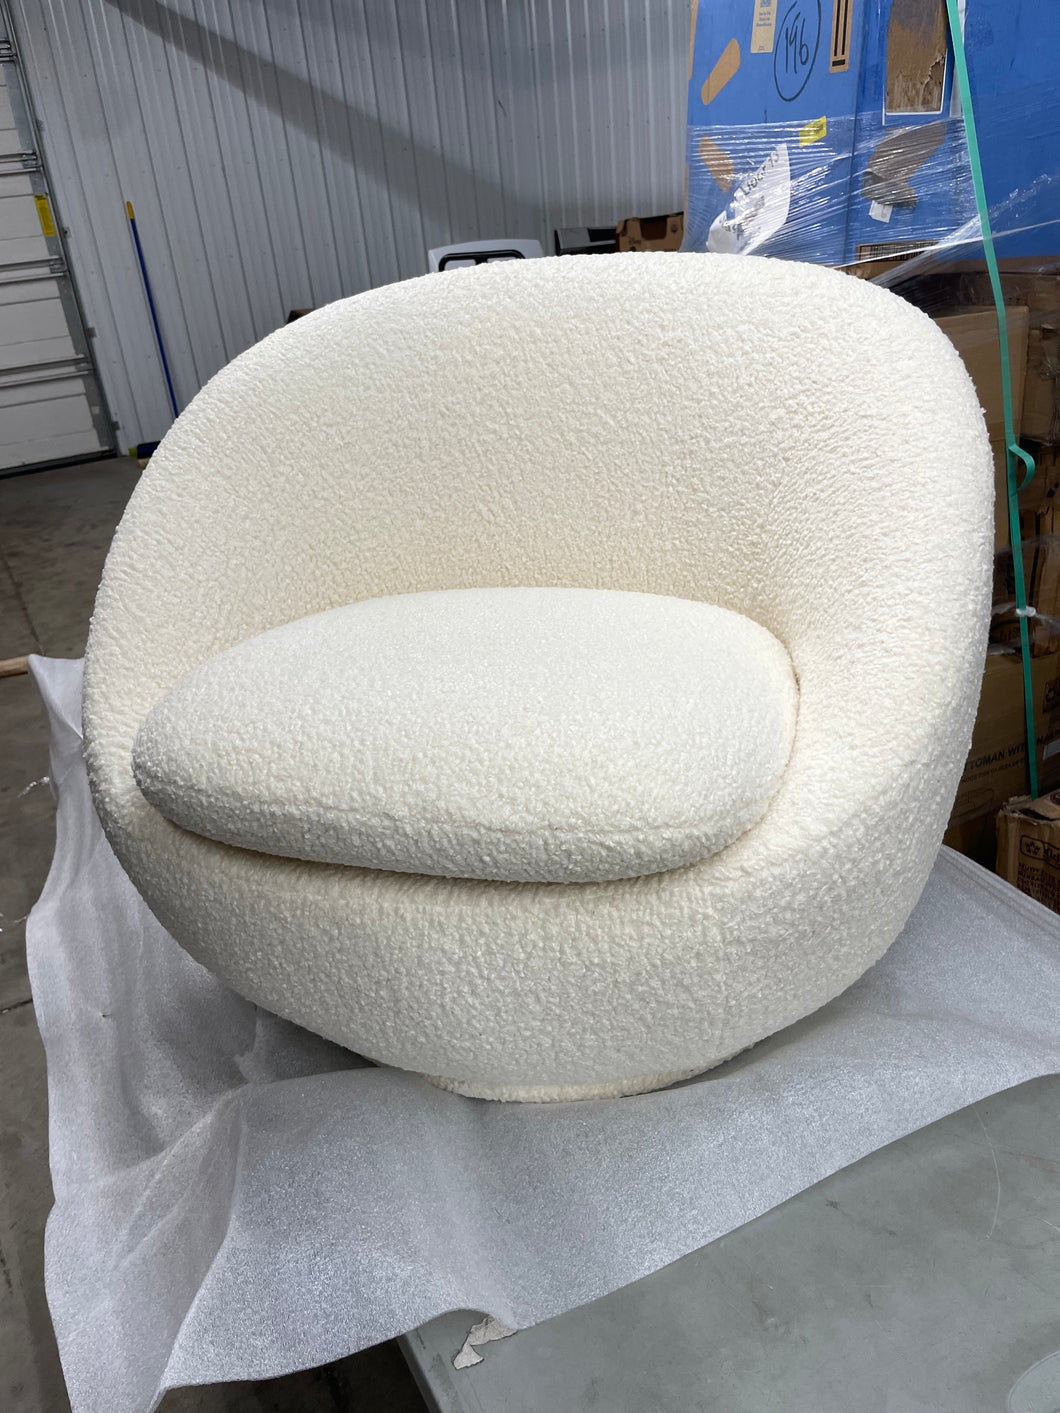 Better Homes & Gardens Cozy Upholstered Sherpa Swivel Chair, Cream**New**